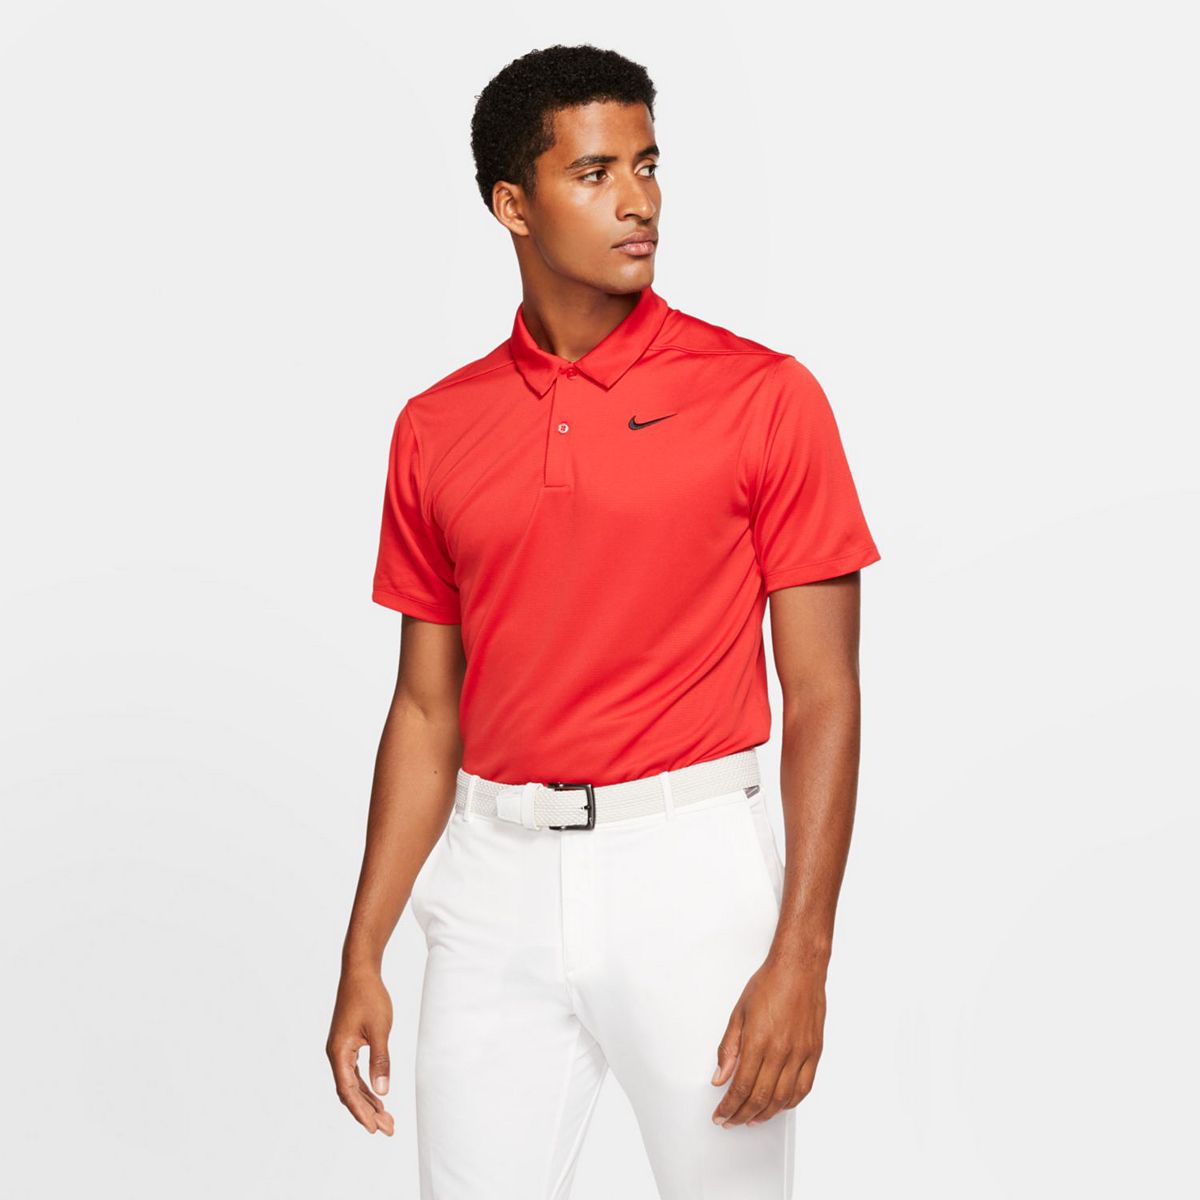 Nike Golf Mens Shirt Size XL Brand new